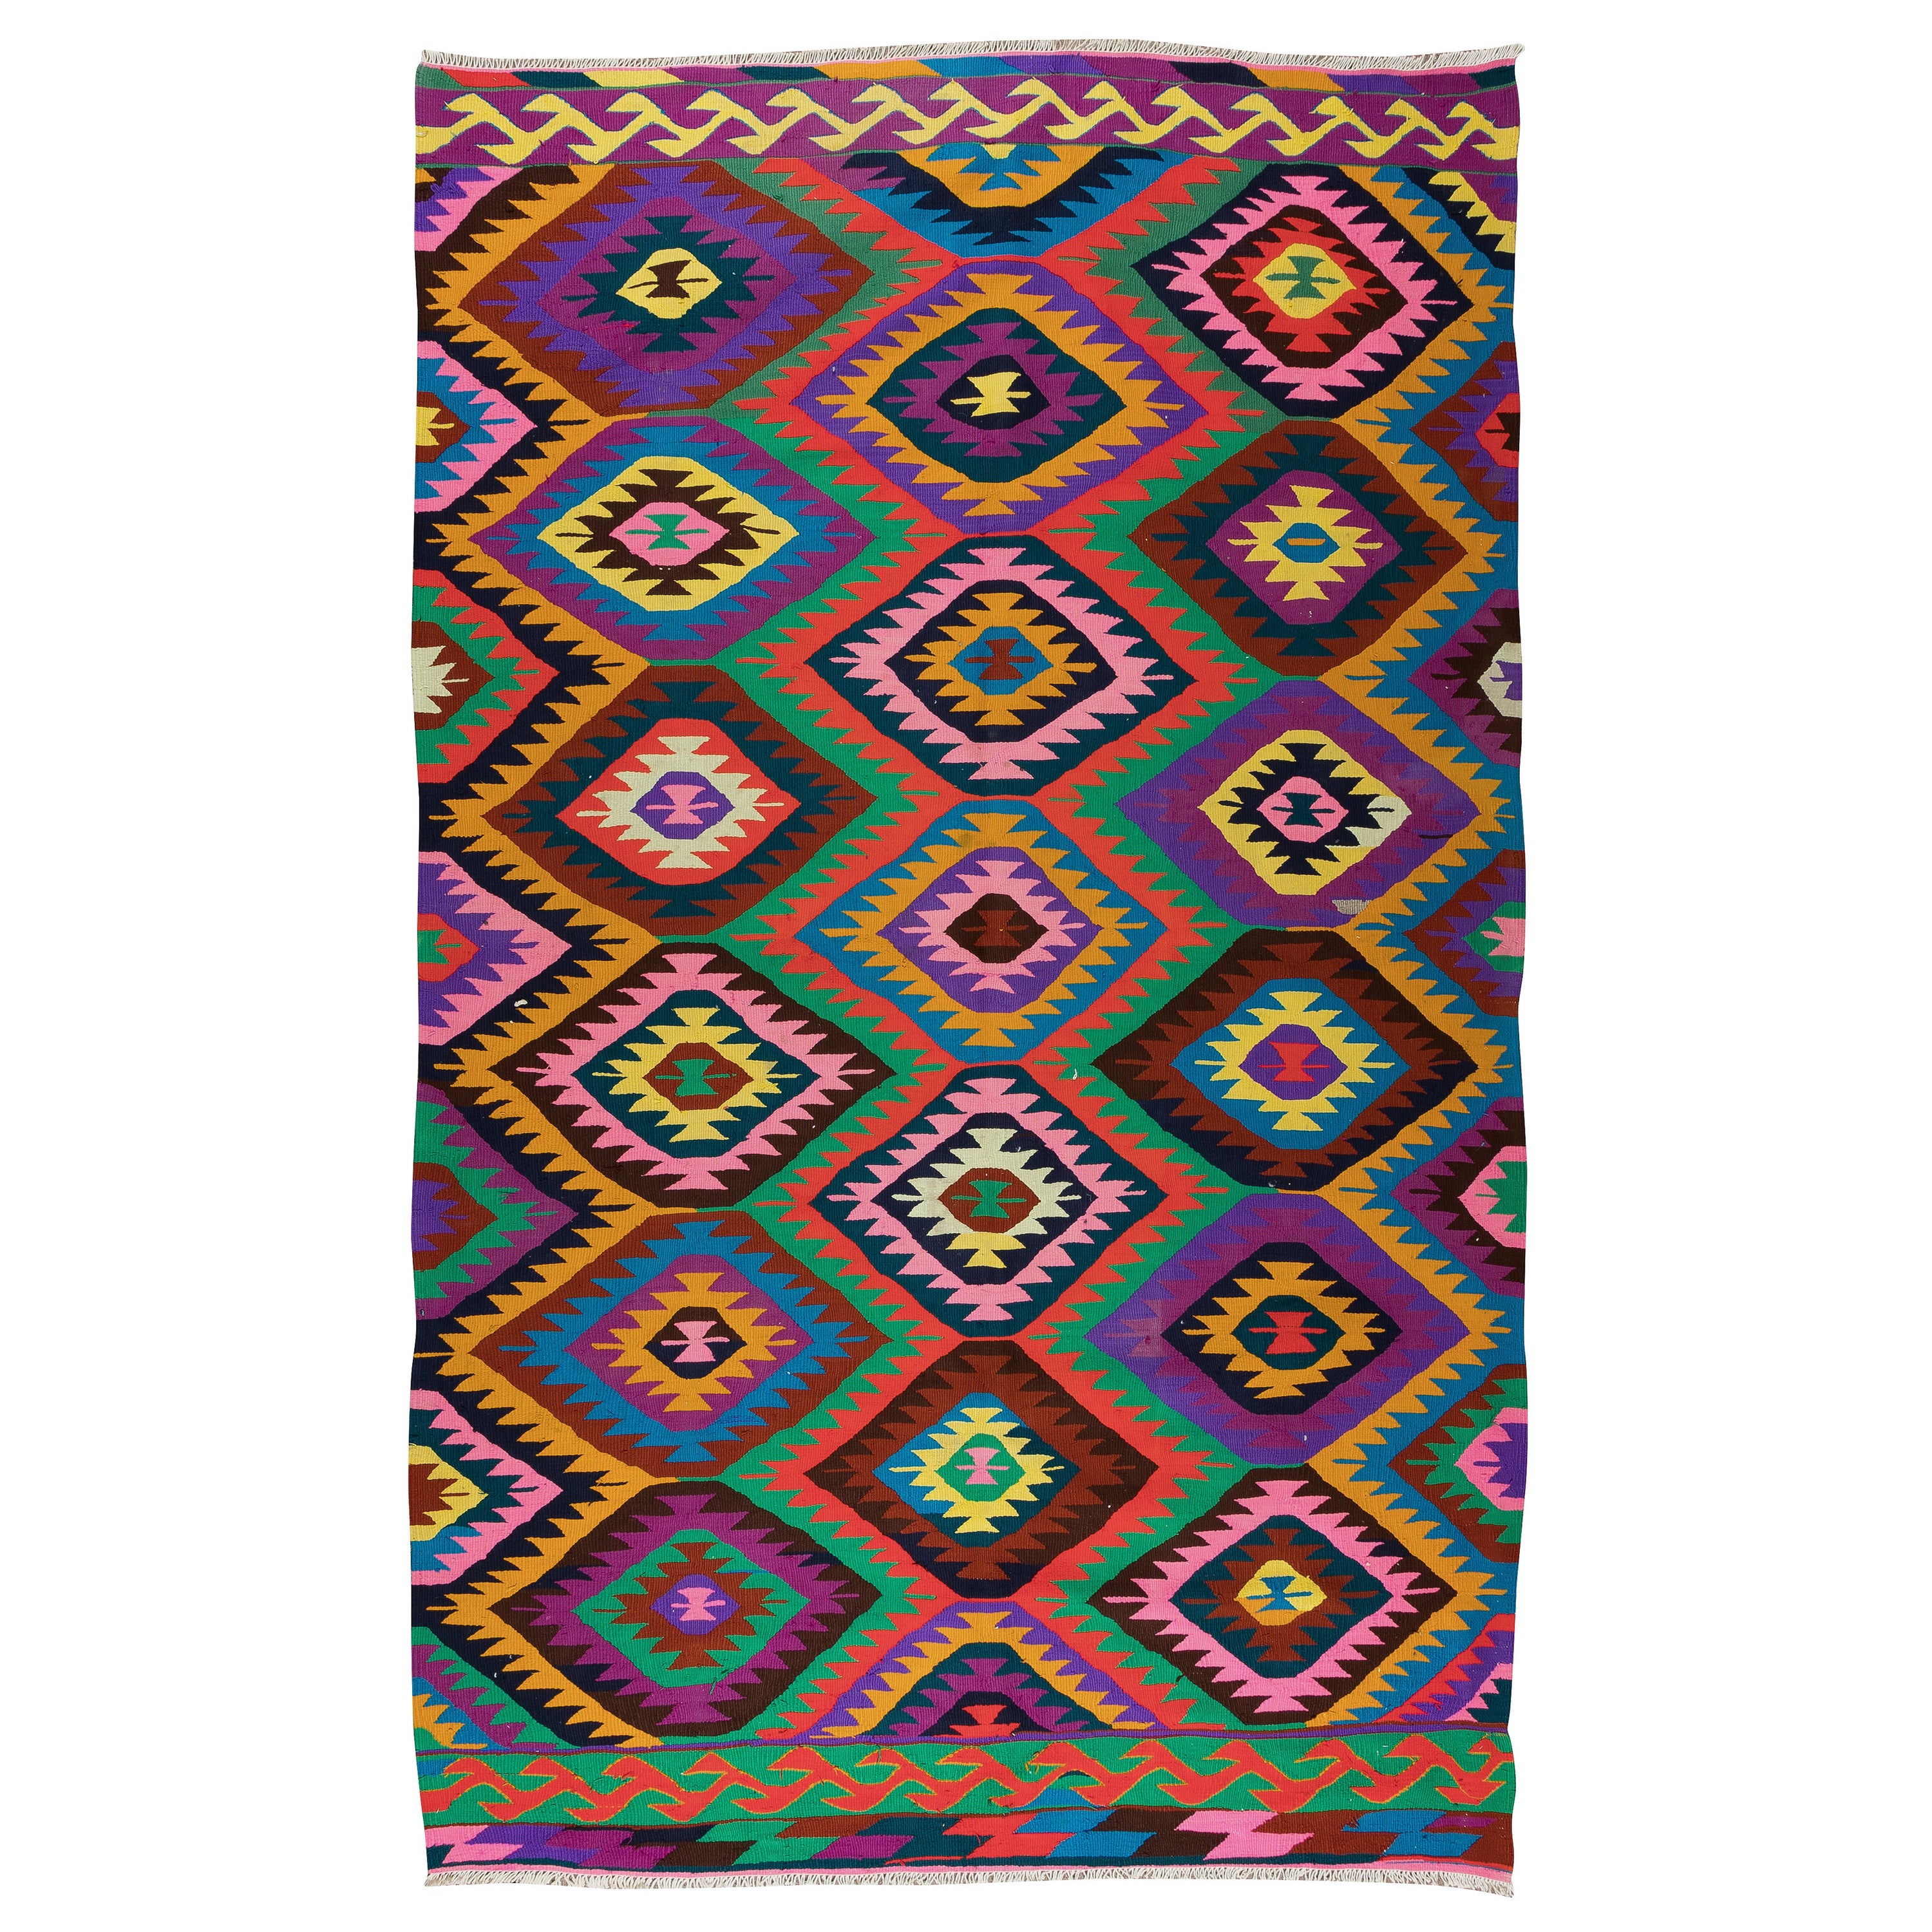 5.4x8.8 Ft Dazzling Handmade Turkish Kilim. Colorful Flat-Weave Rug. All Wool